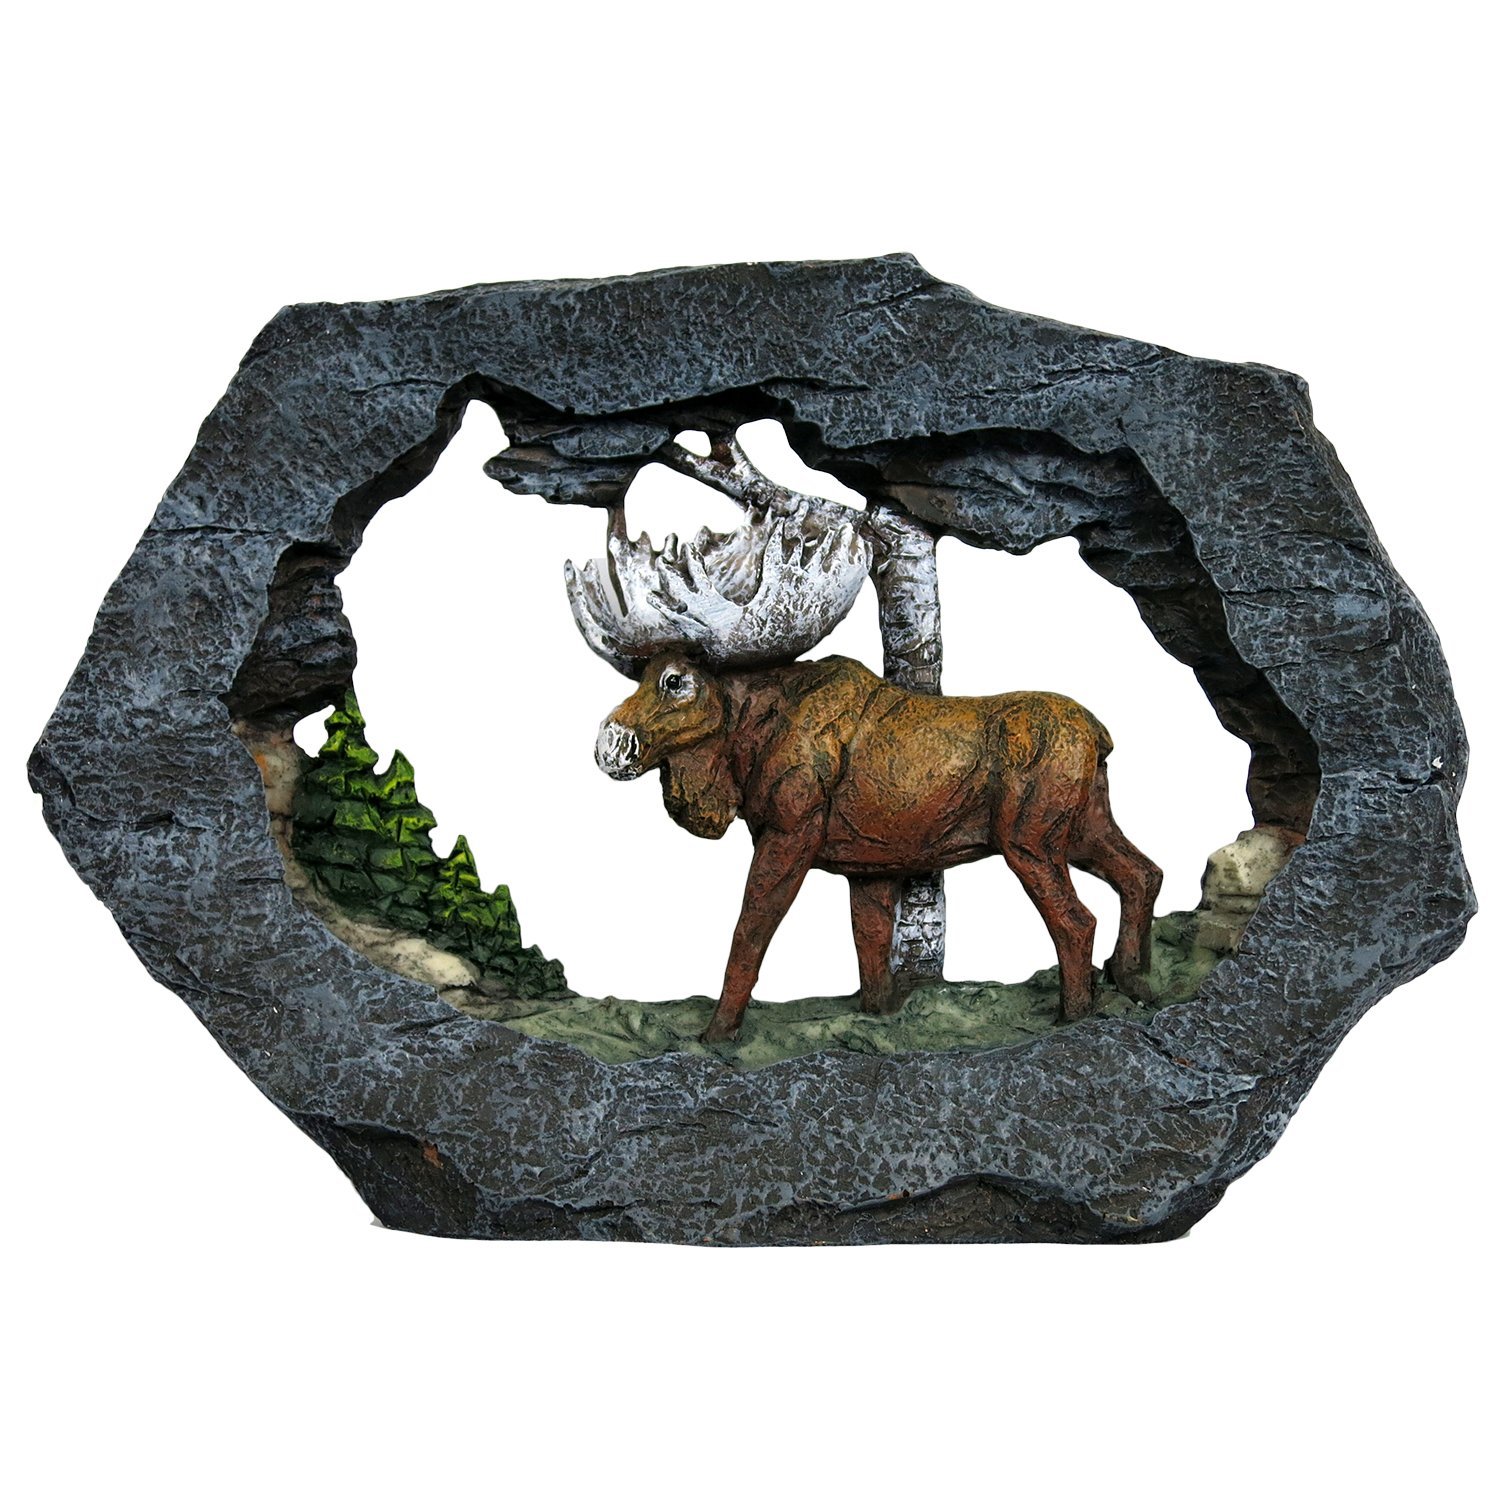 Regal Elites Vista Rock Series 9 Inch Long Wildlife Sculpture - MOOSE on The Roc - $29.99